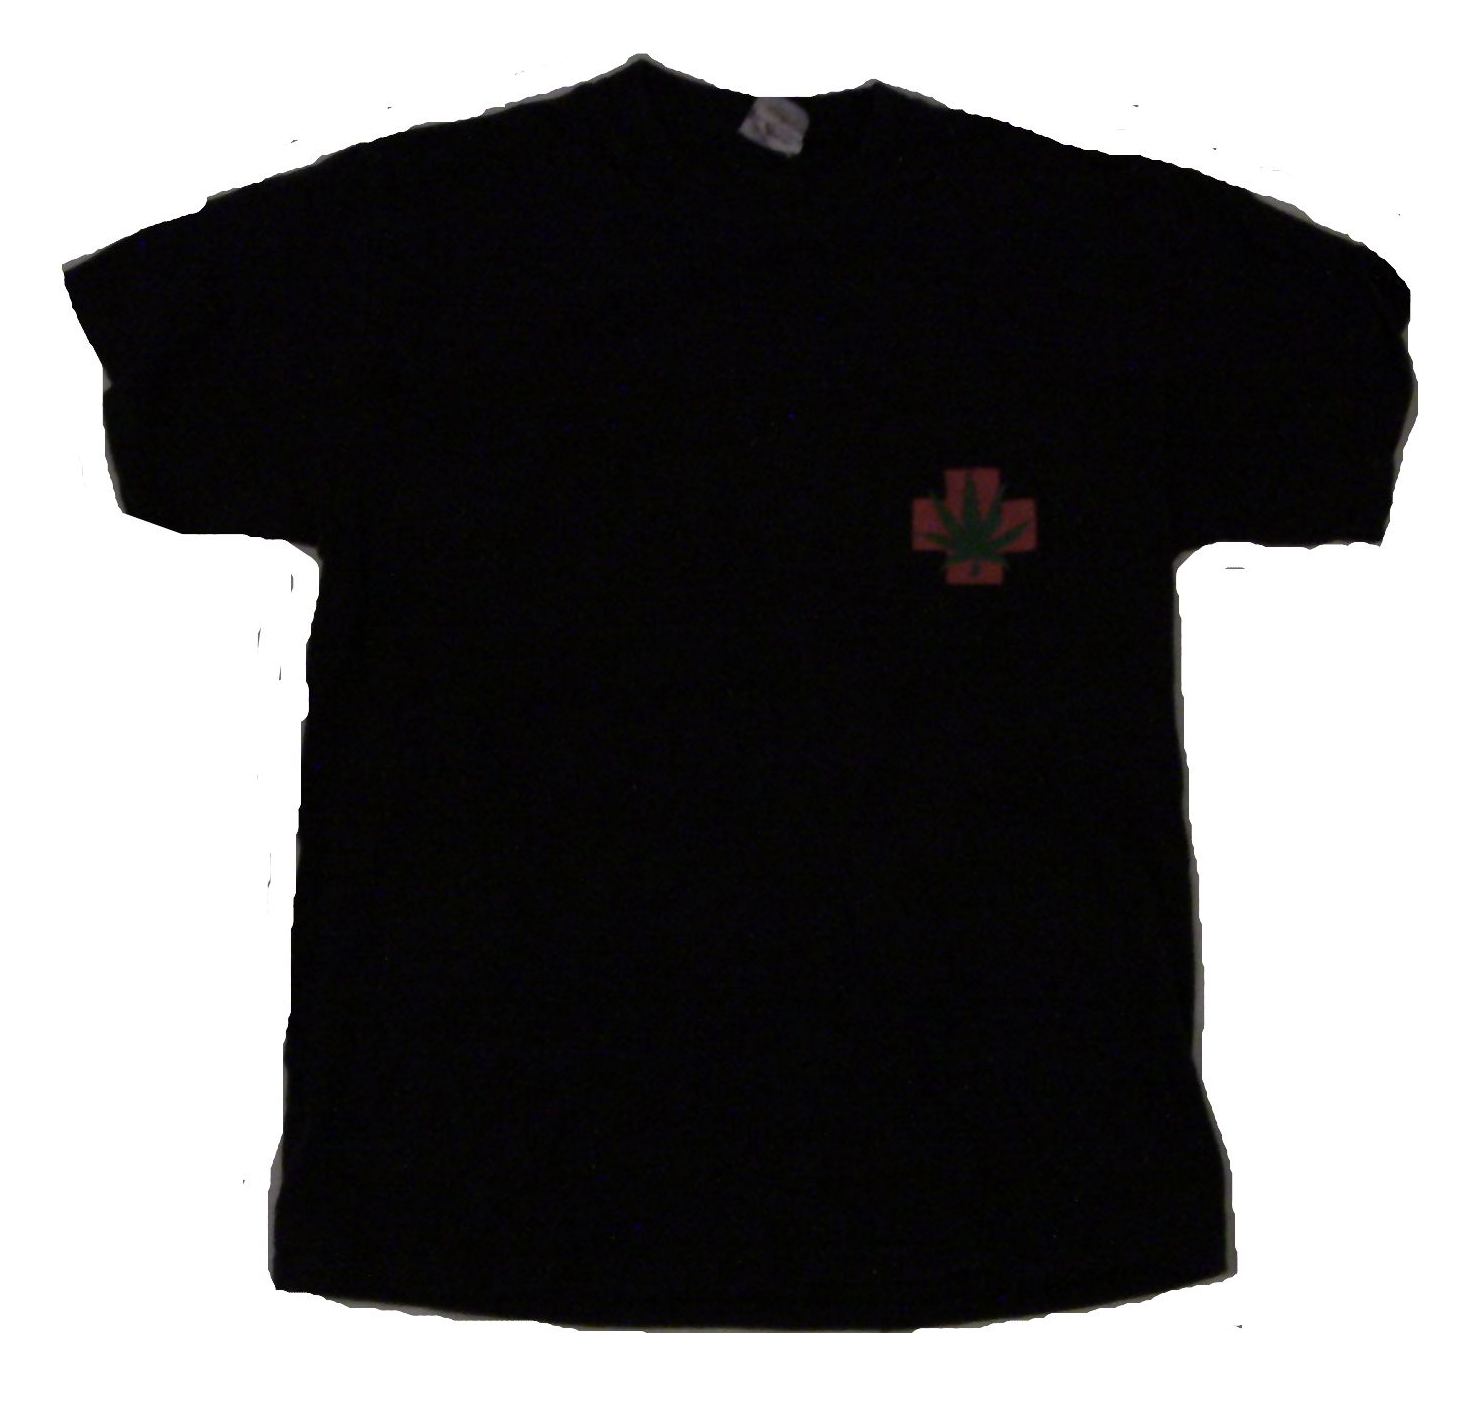 MERCY Tee shirt, Black, Pioneer logo, back